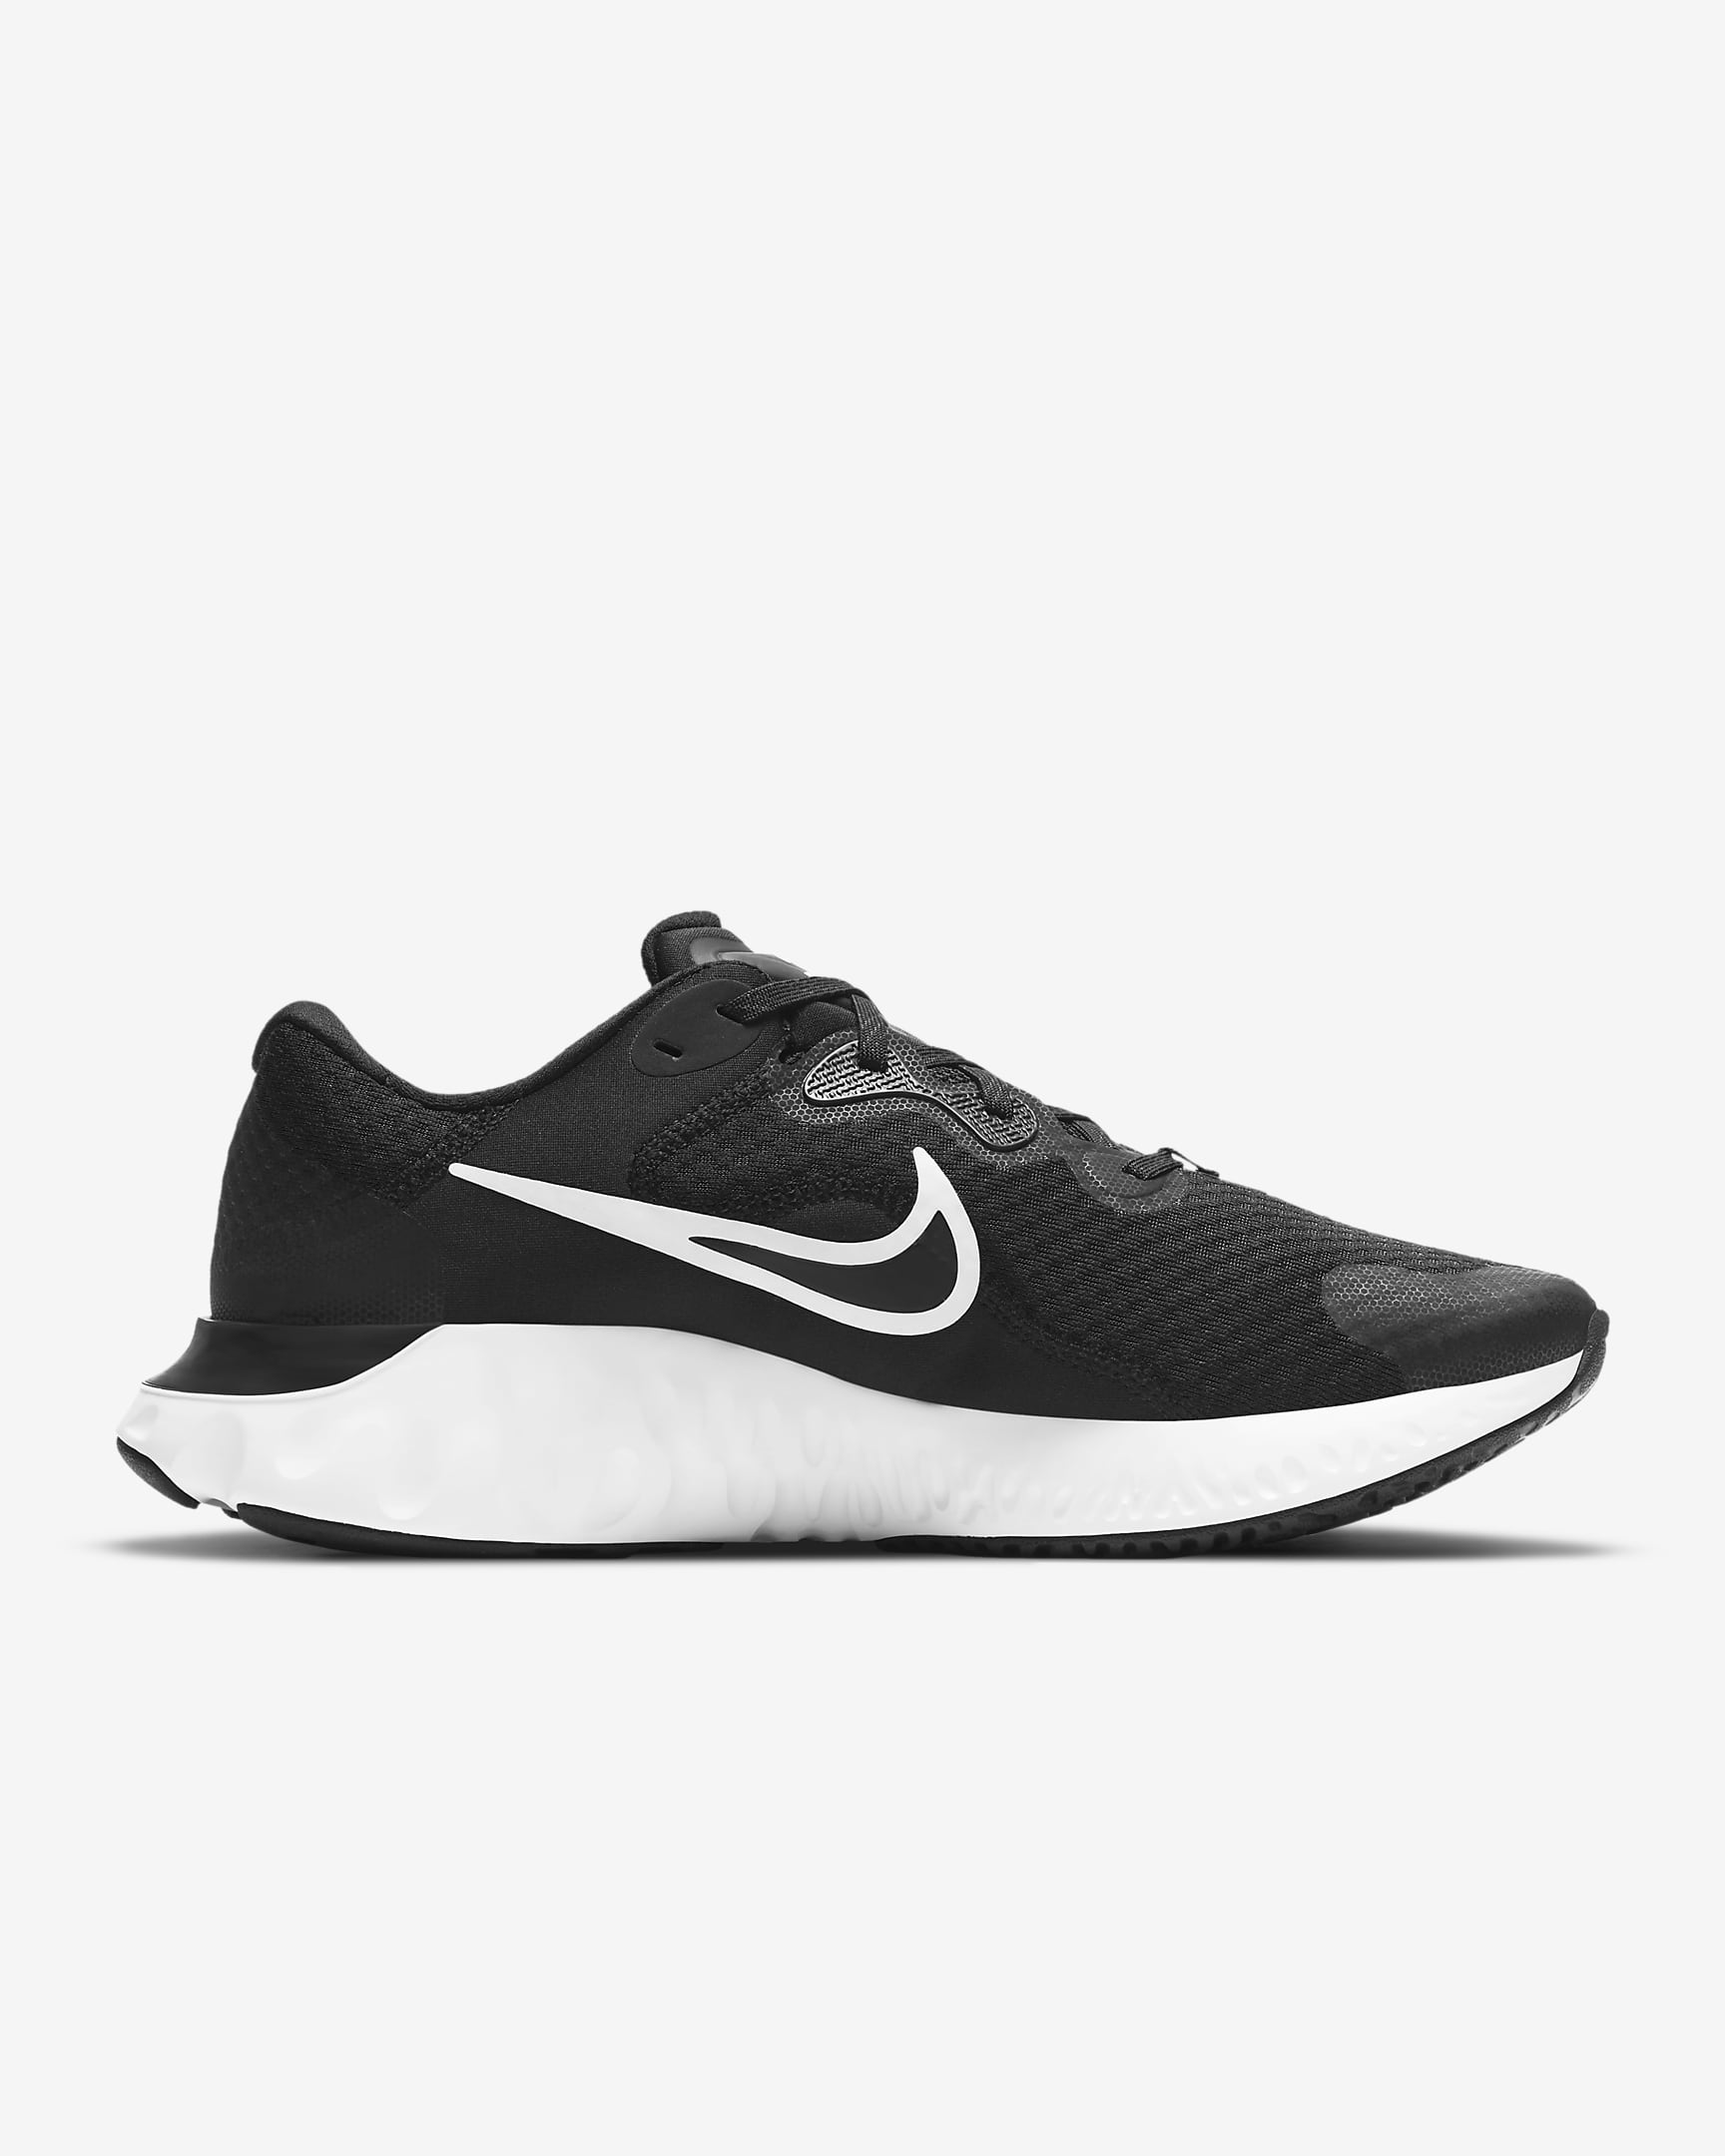 Nike Renew Run 2 Men's Road Running Shoe - Black/Dark Smoke Grey/White